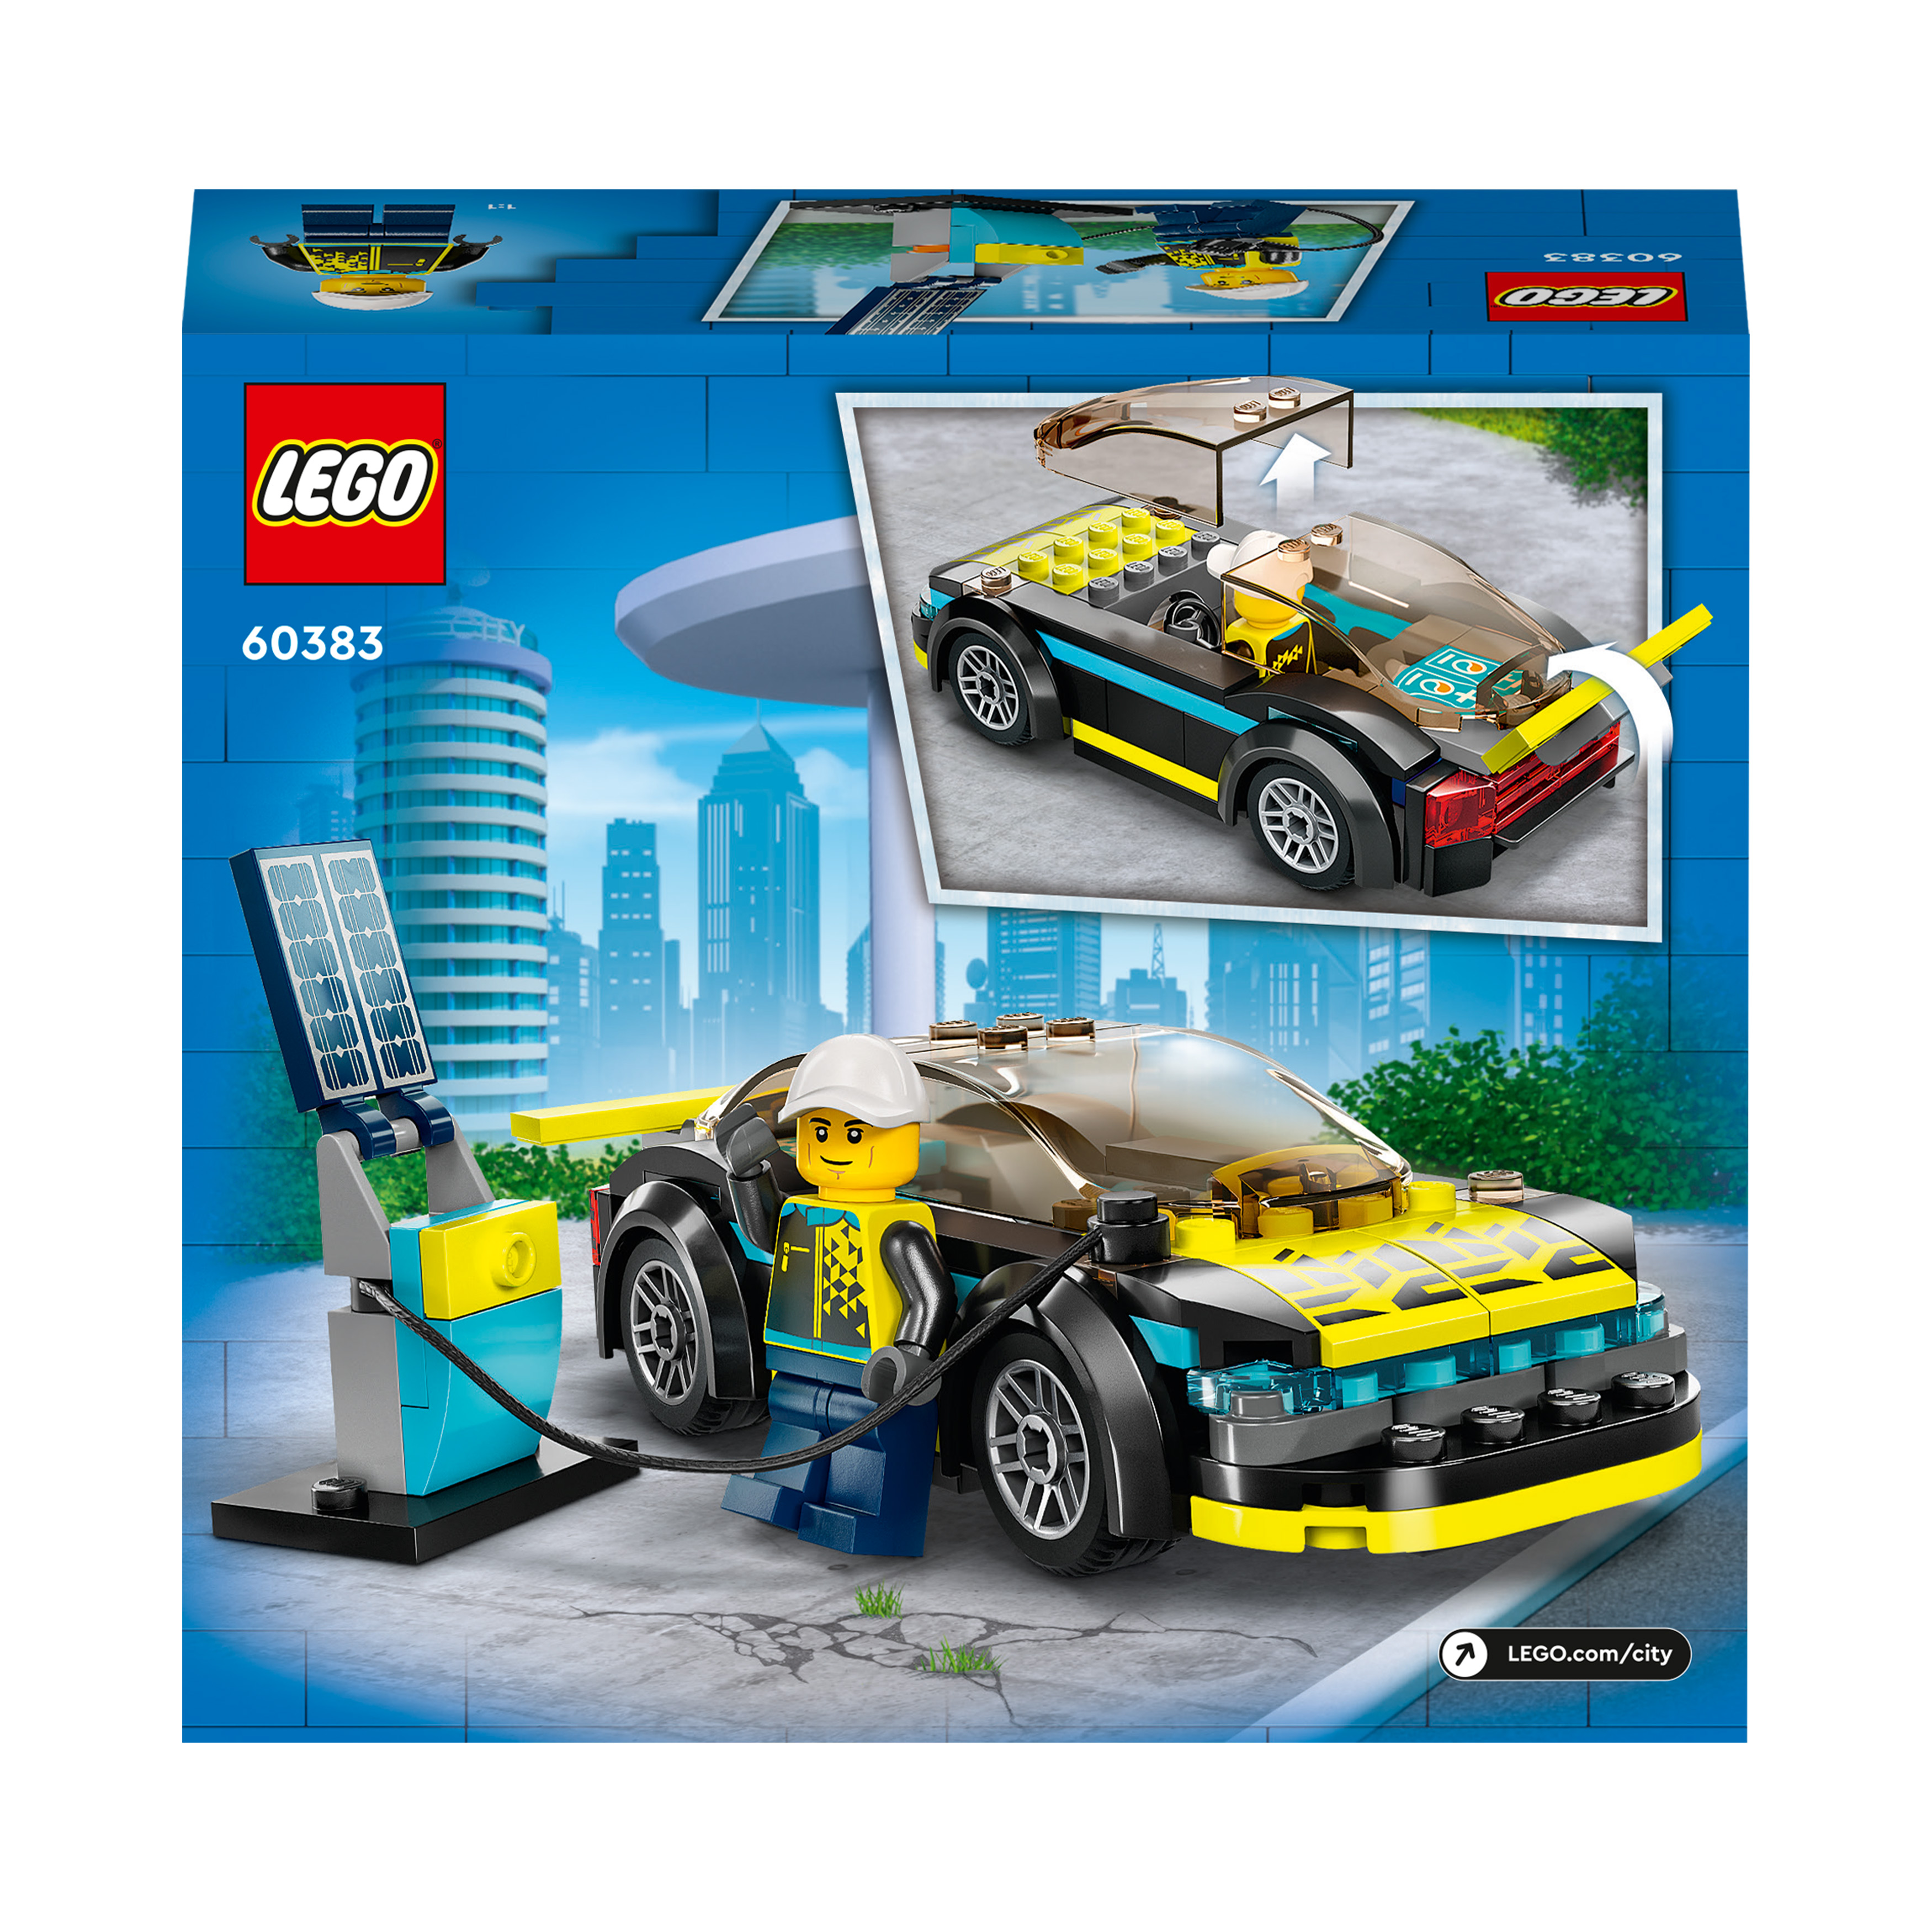 Bausatz, City LEGO Mehrfarbig Elektro-Sportwagen 60383